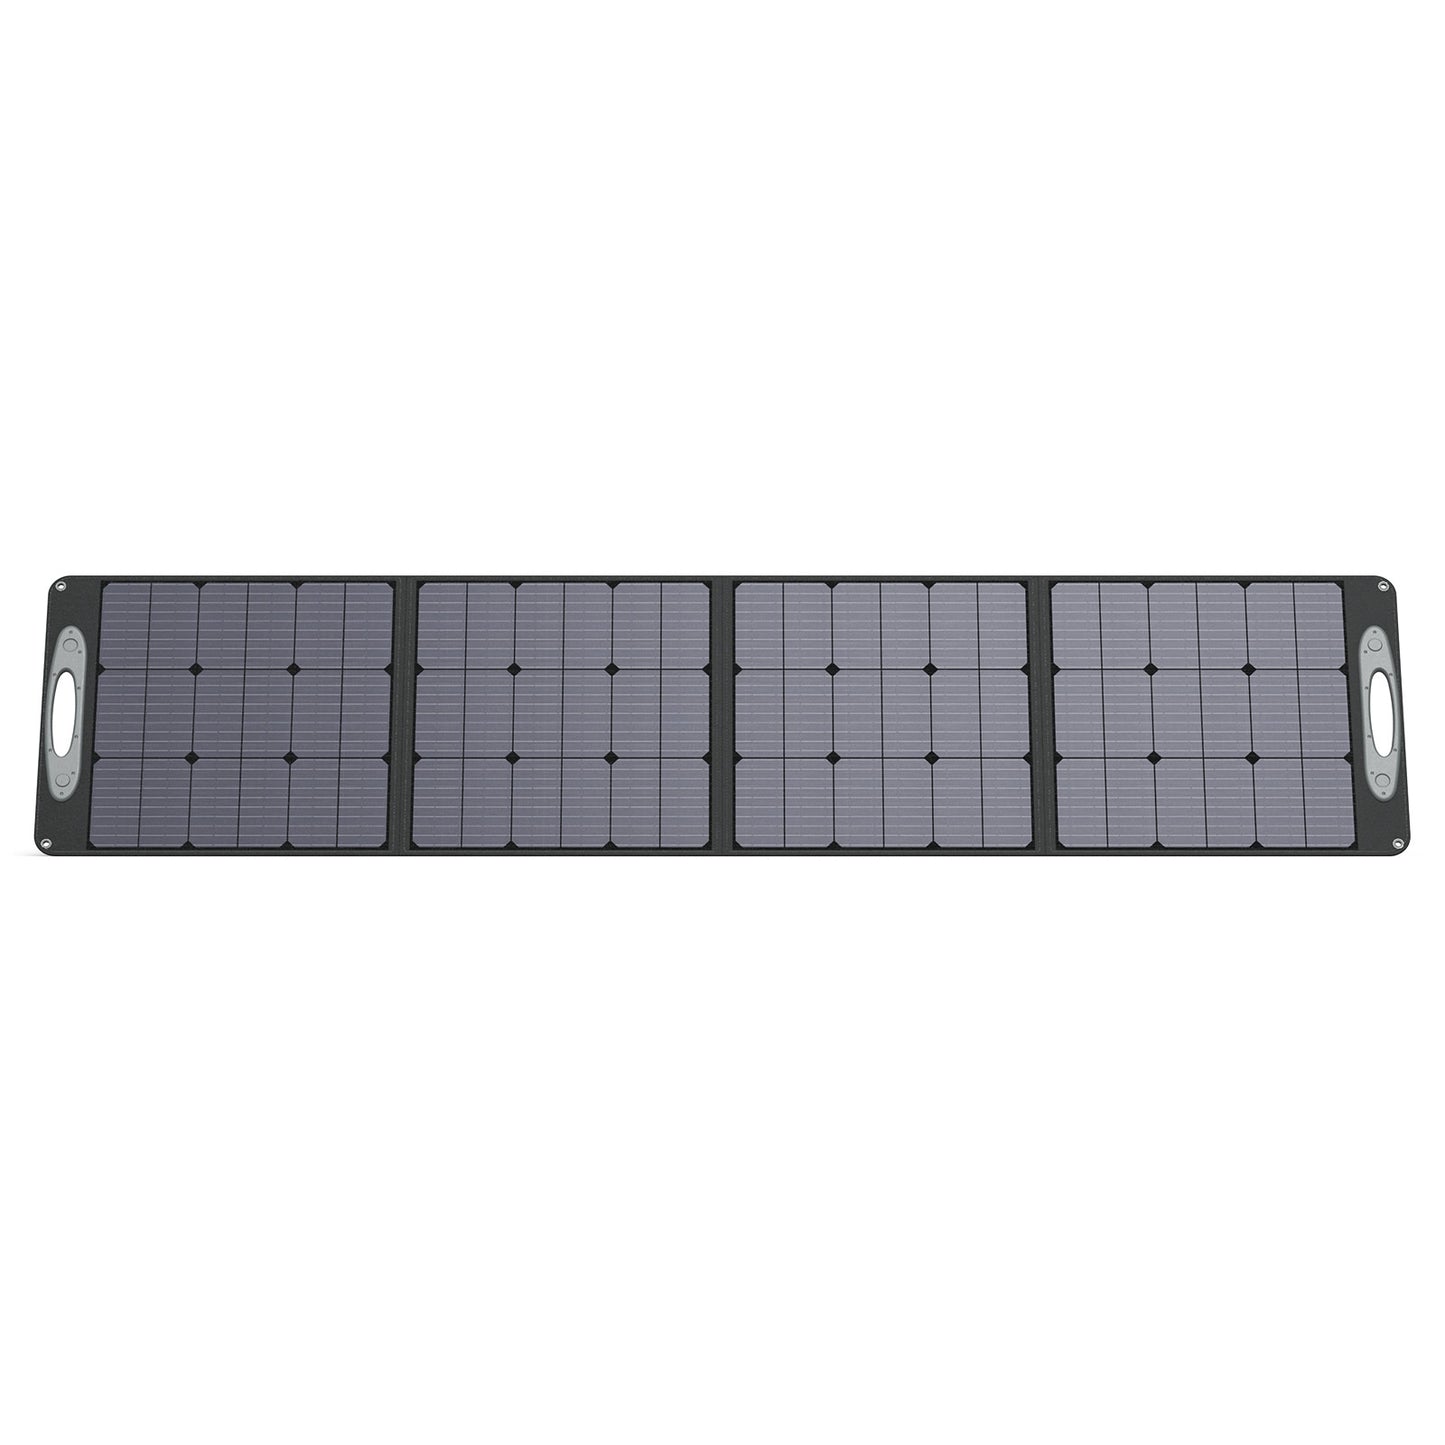 Tragbares Solarpanel 200 W 